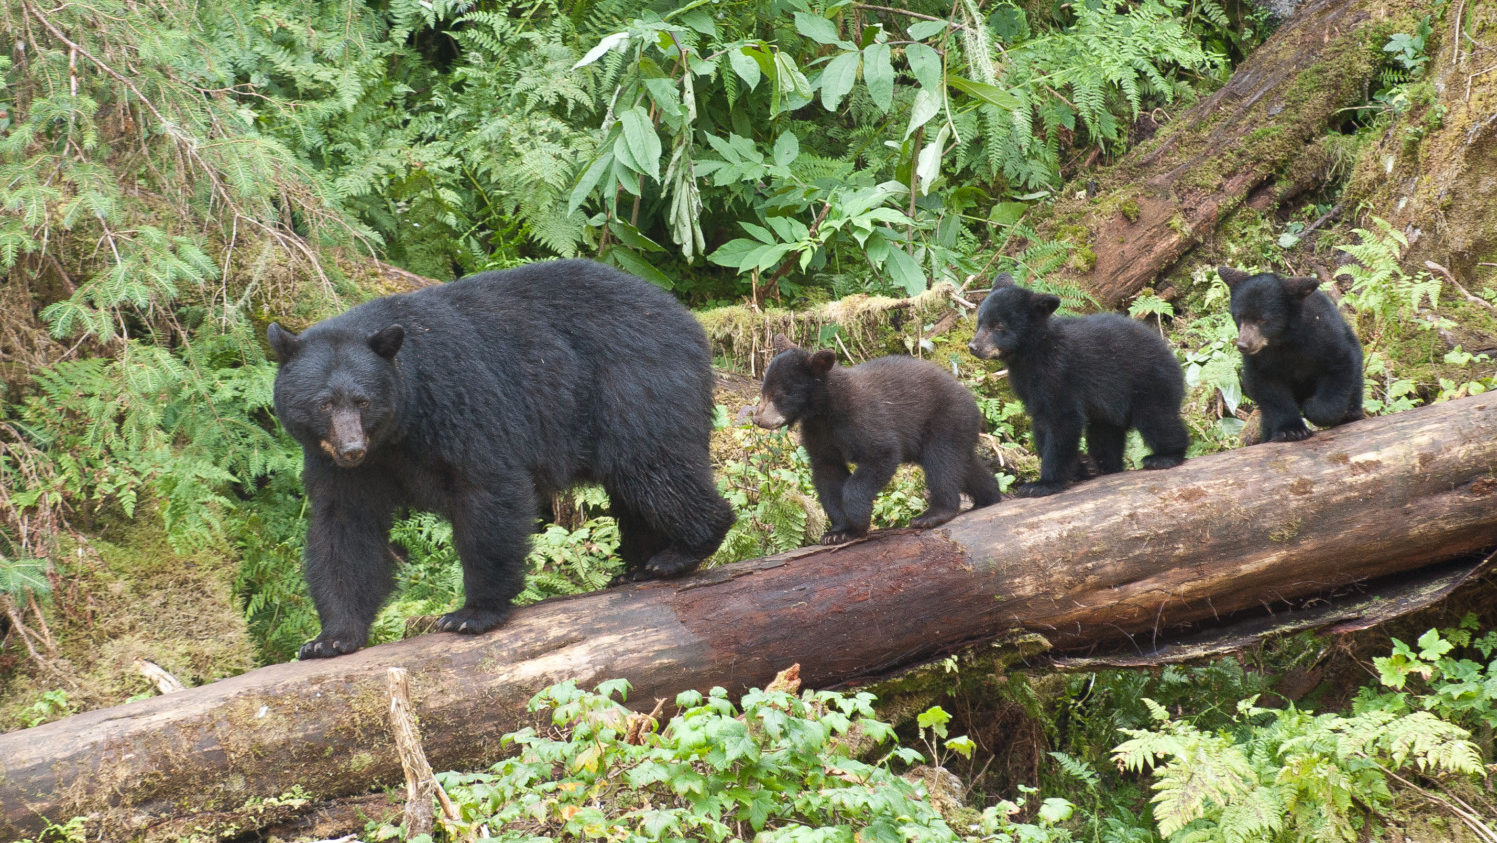 Mama bear followed by three cubs